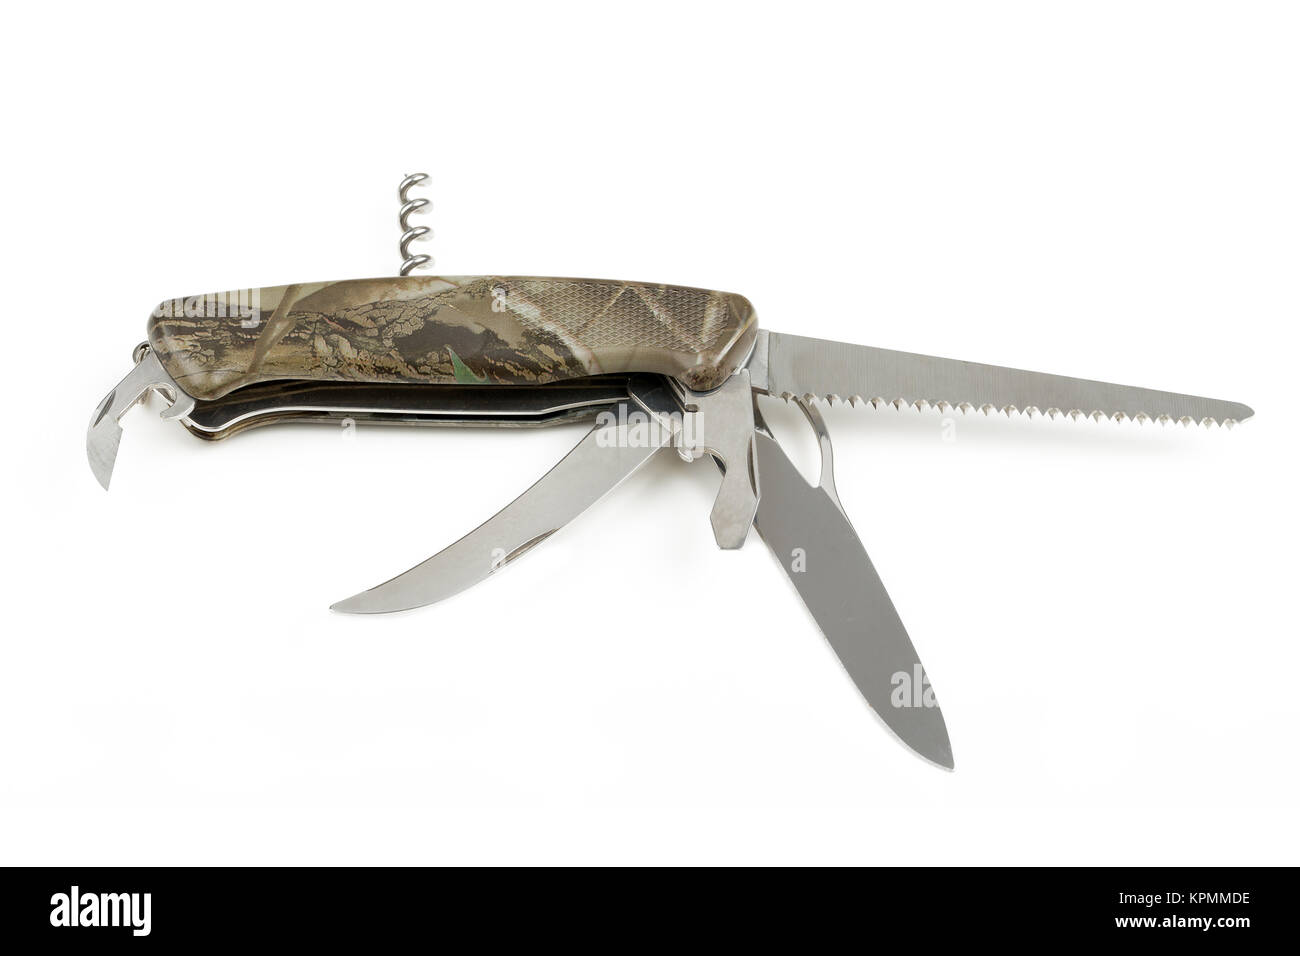 Cuchillo Multiusos aislado en blanco Fotografía de stock - Alamy